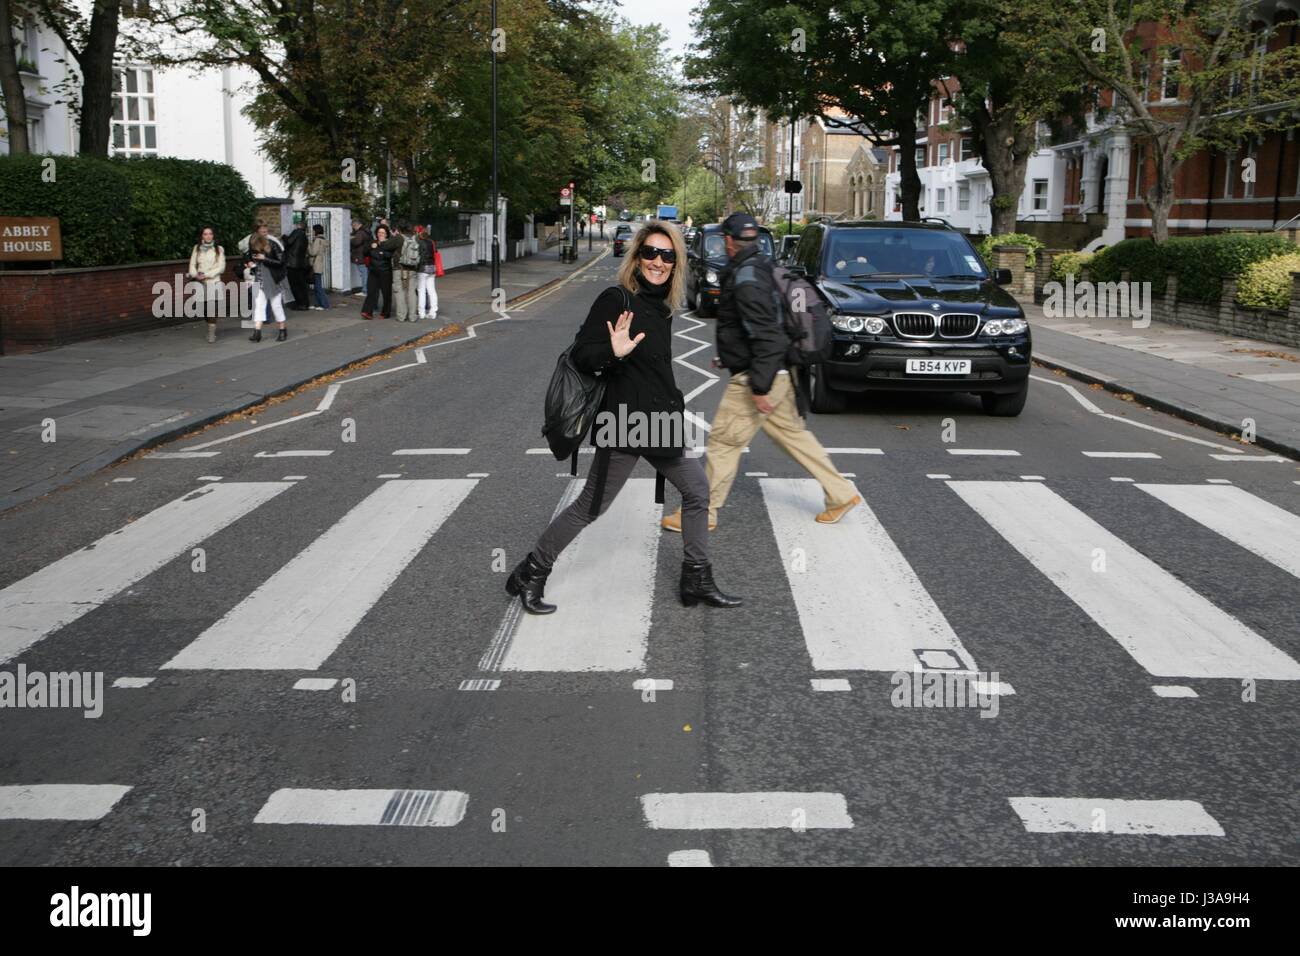 Abbey Road in London Foto Eric Morere Stockfoto